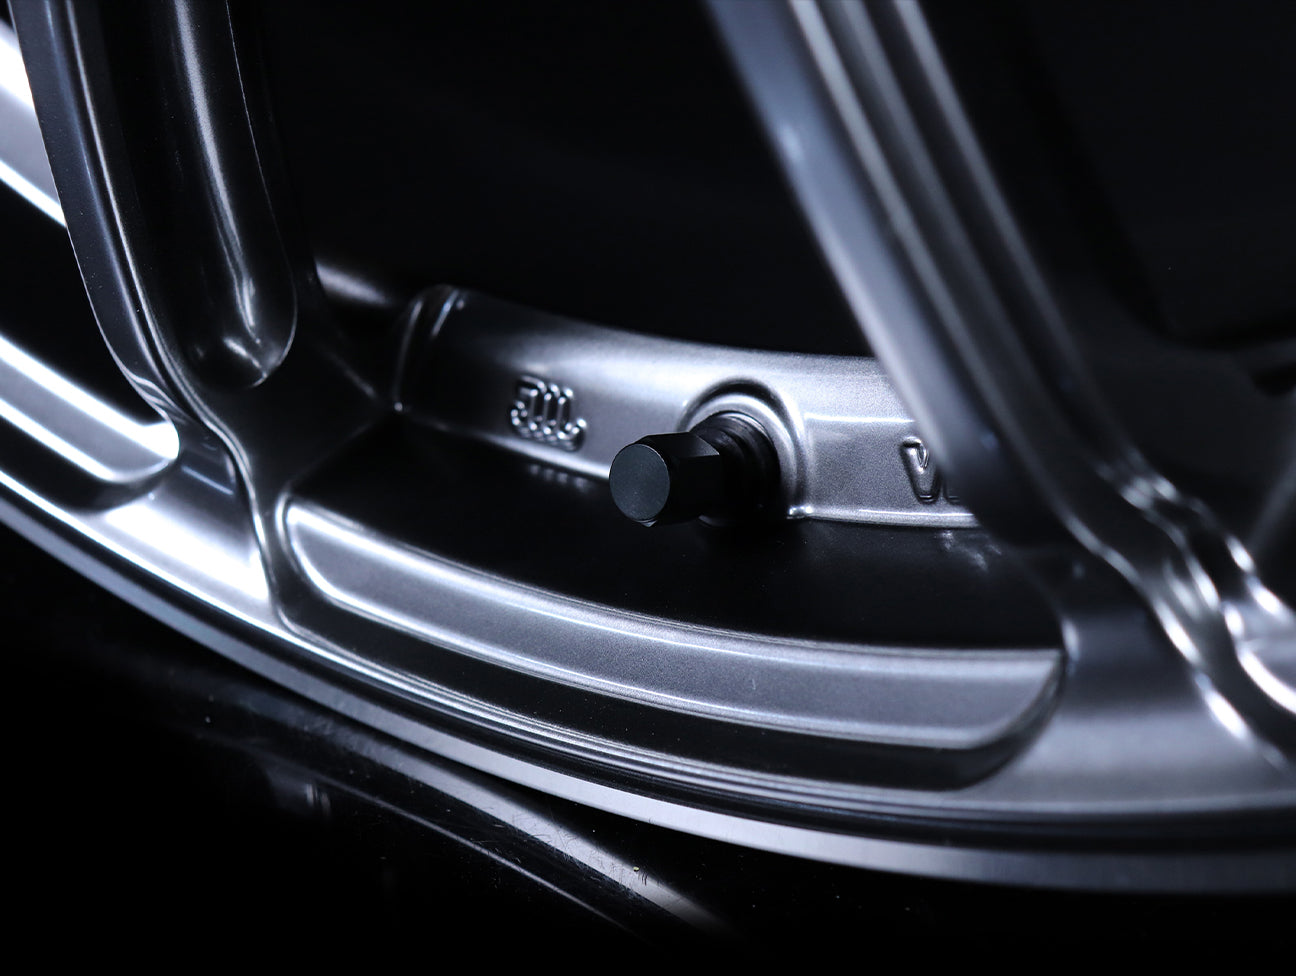 Advan Racing RZII Wheels - Hyper Black / 19x9.5 / 5x120 / +35